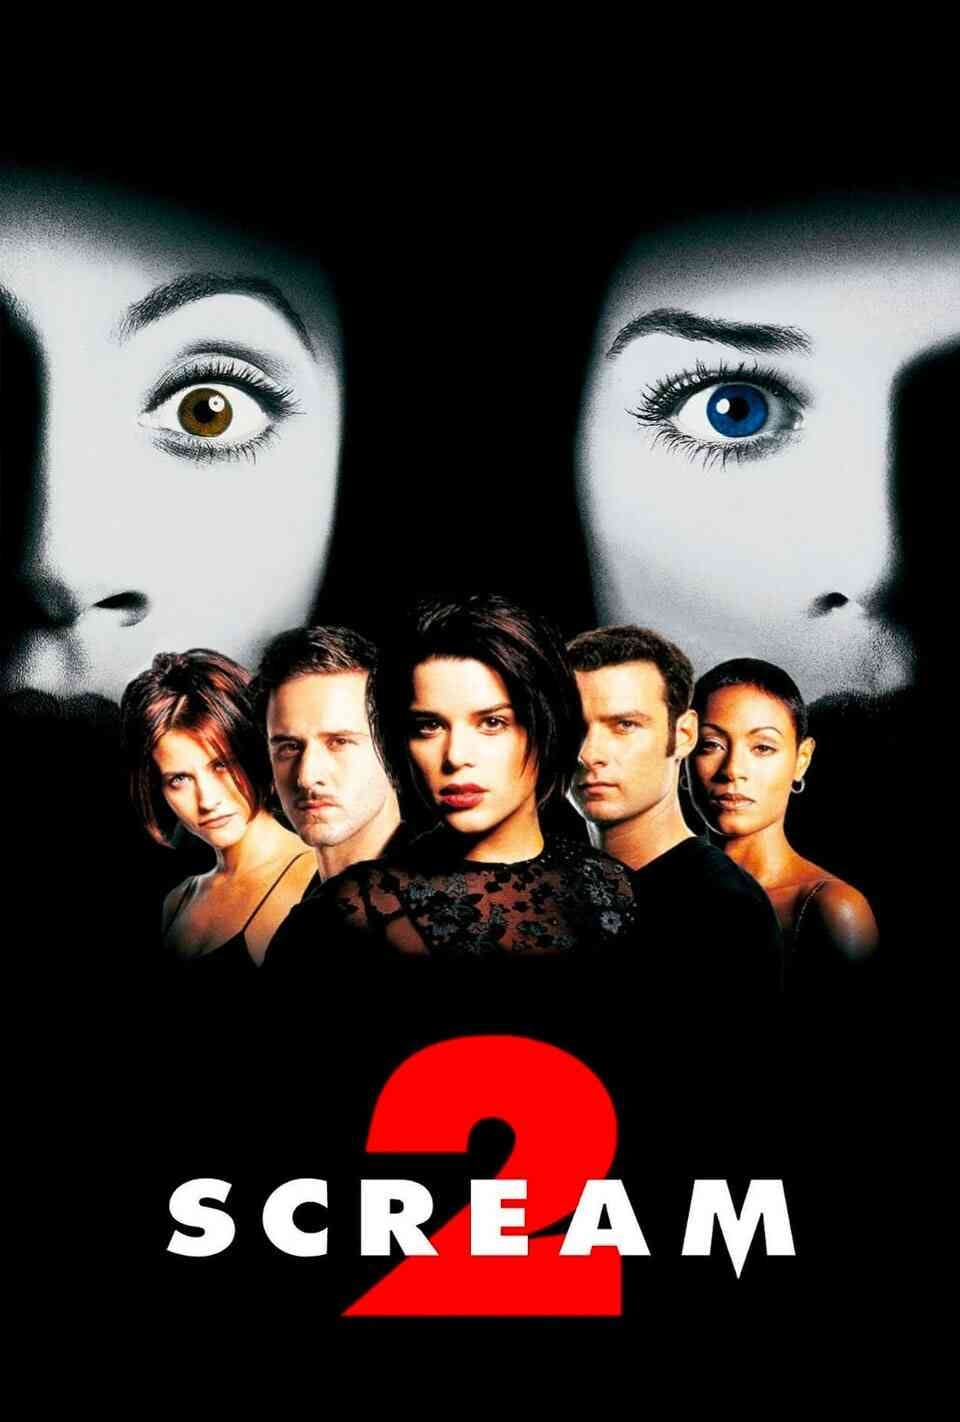 Read Scream 2 screenplay (poster)